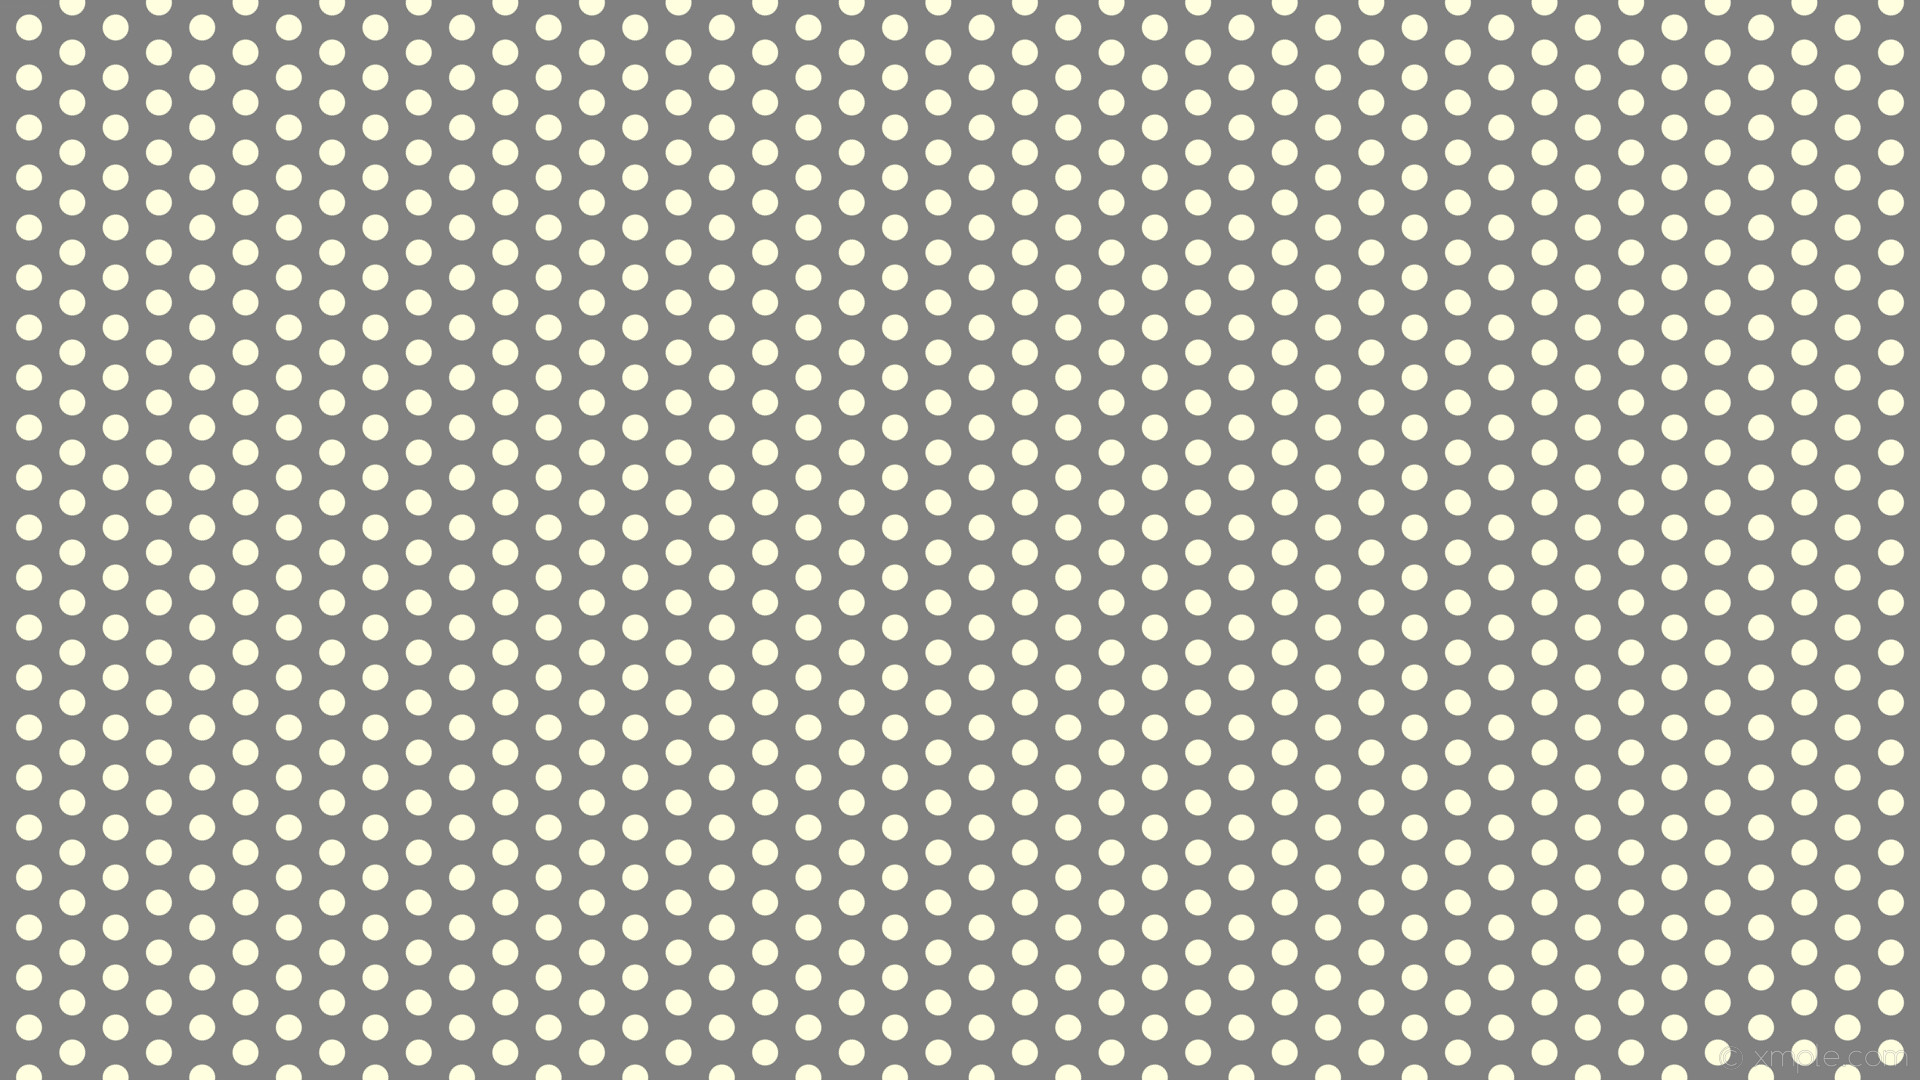 1920x1080 wallpaper dots hexagon yellow polka grey gray light yellow #808080 #ffffe0  diagonal 30Â°